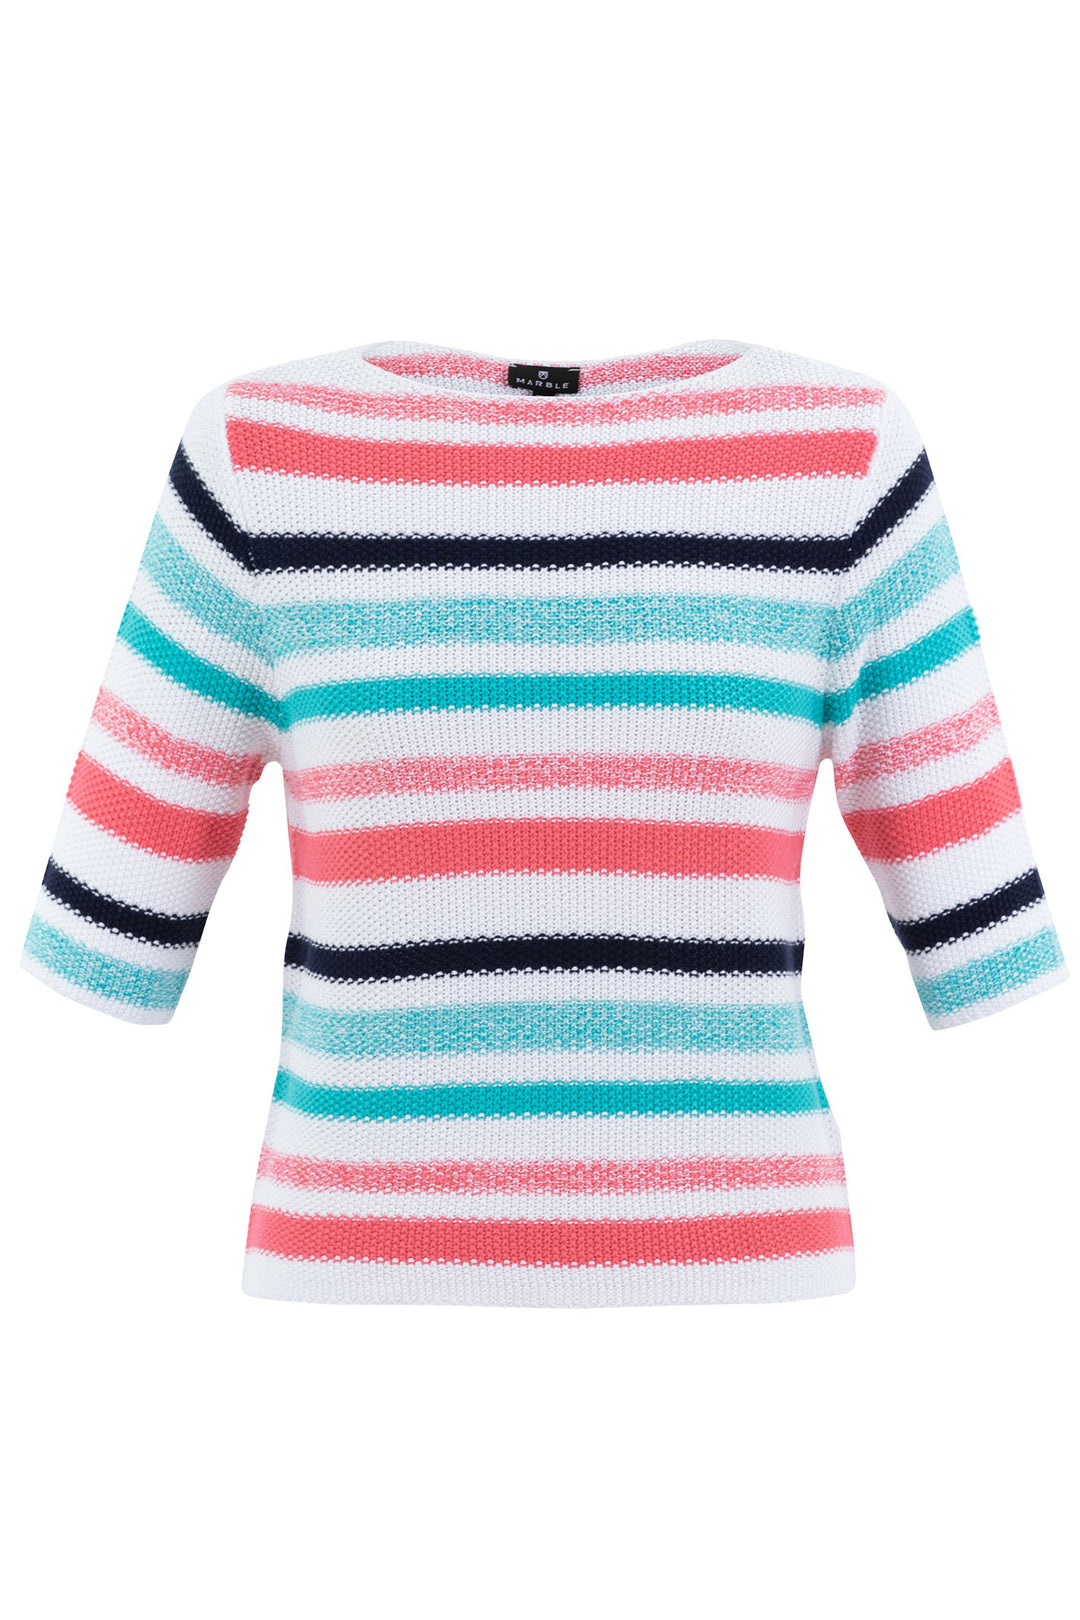 Marble Fashions 6558 135 Multicolour Stripe Knit Top - Experience Boutique